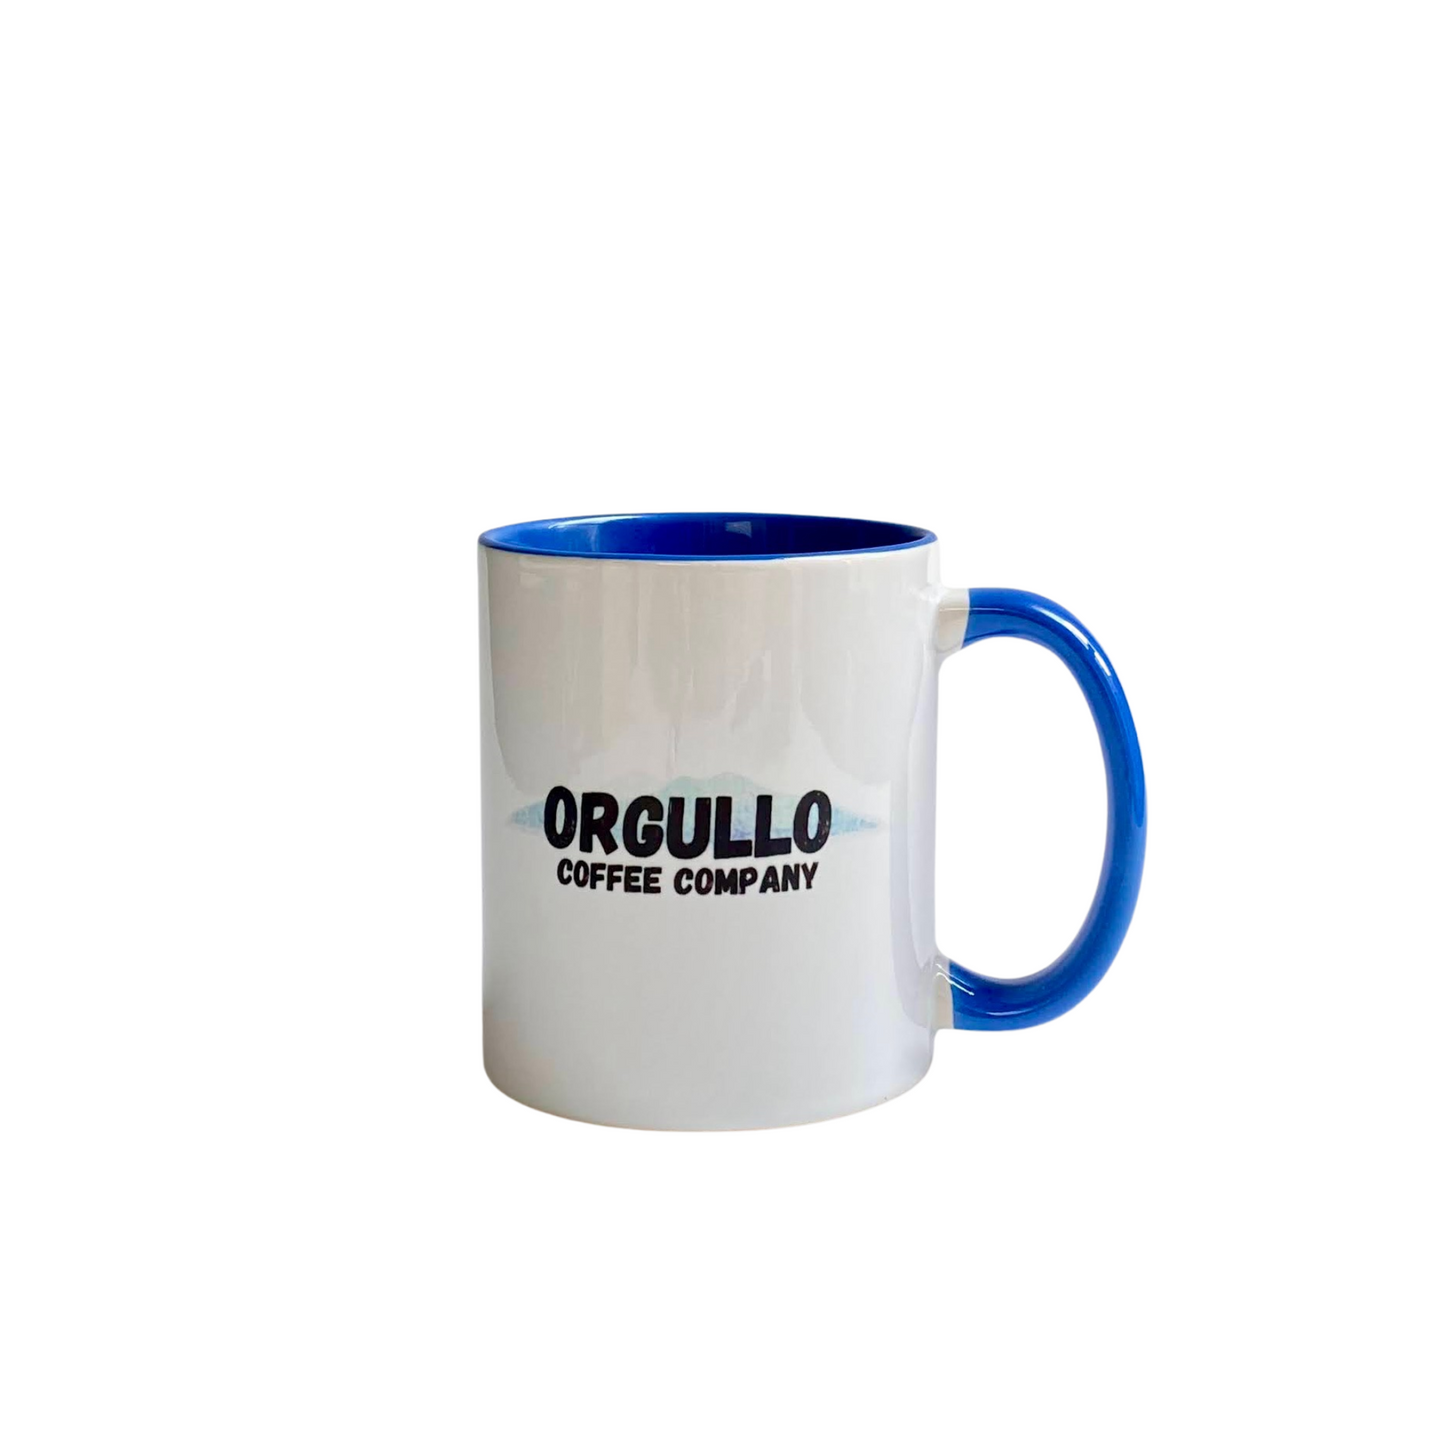 Orgullo Coffee branded mug